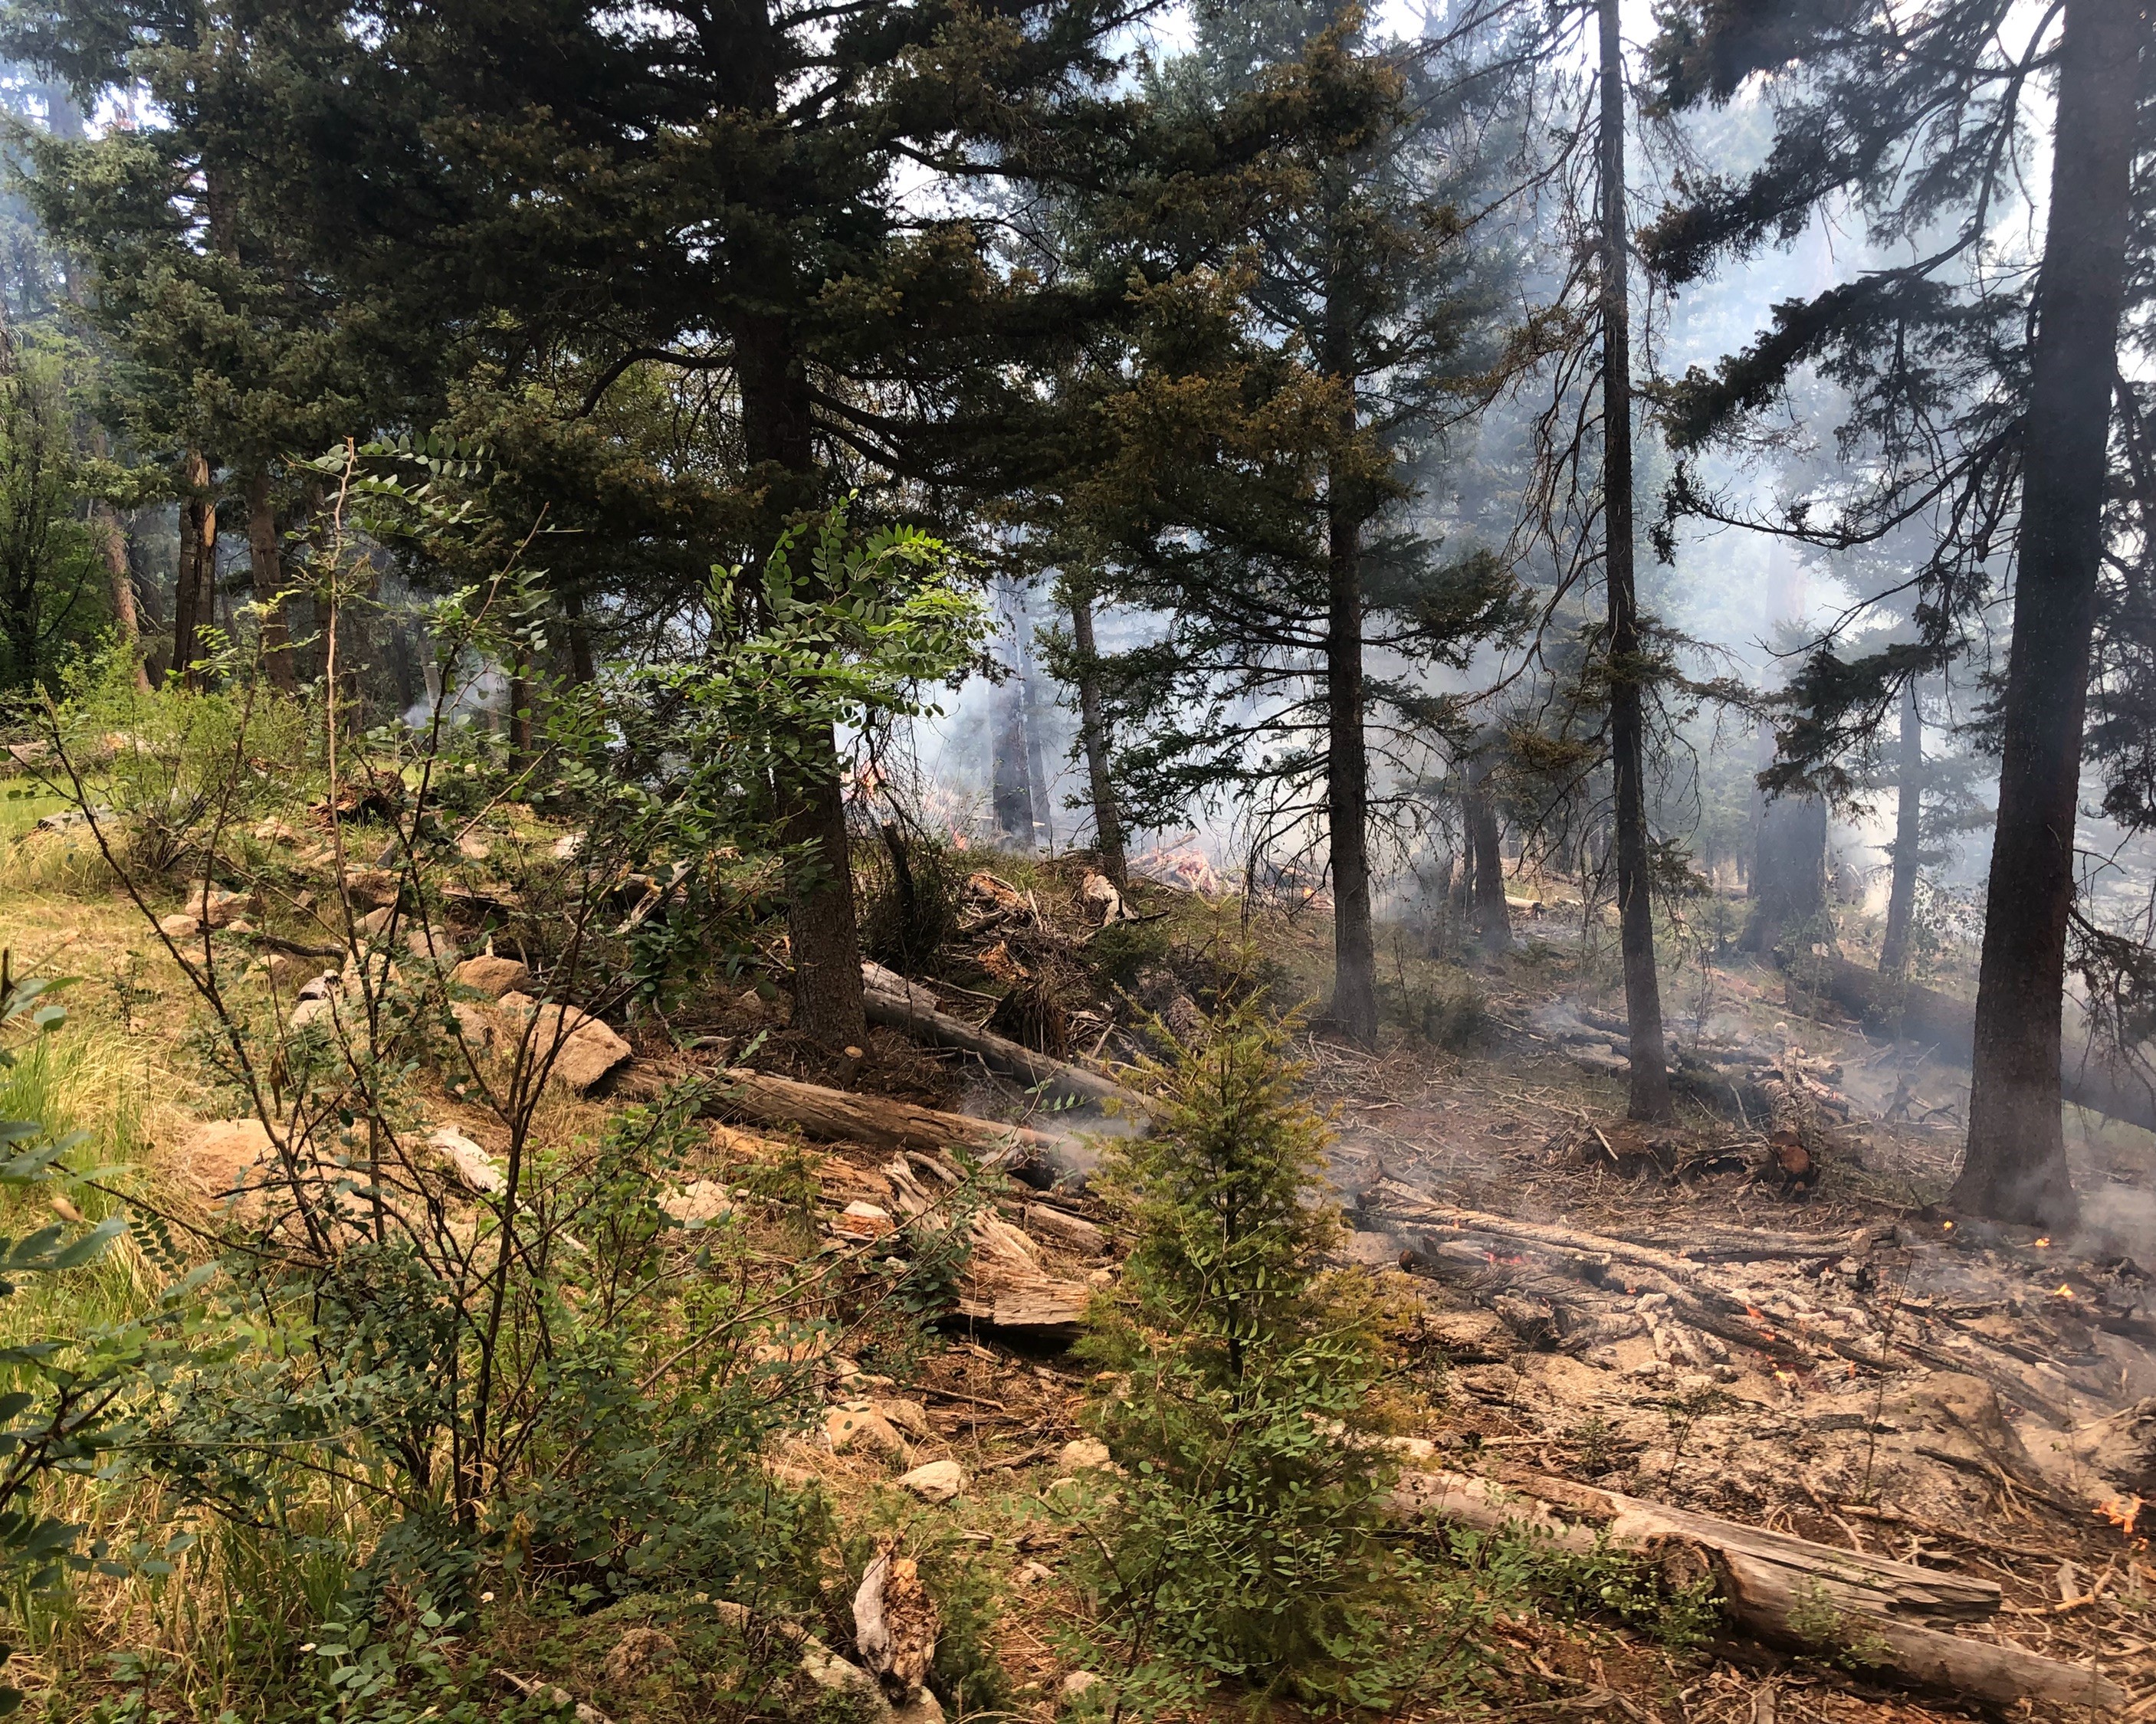 Photograph of smoldering vegetation from Hidden Valley Fire